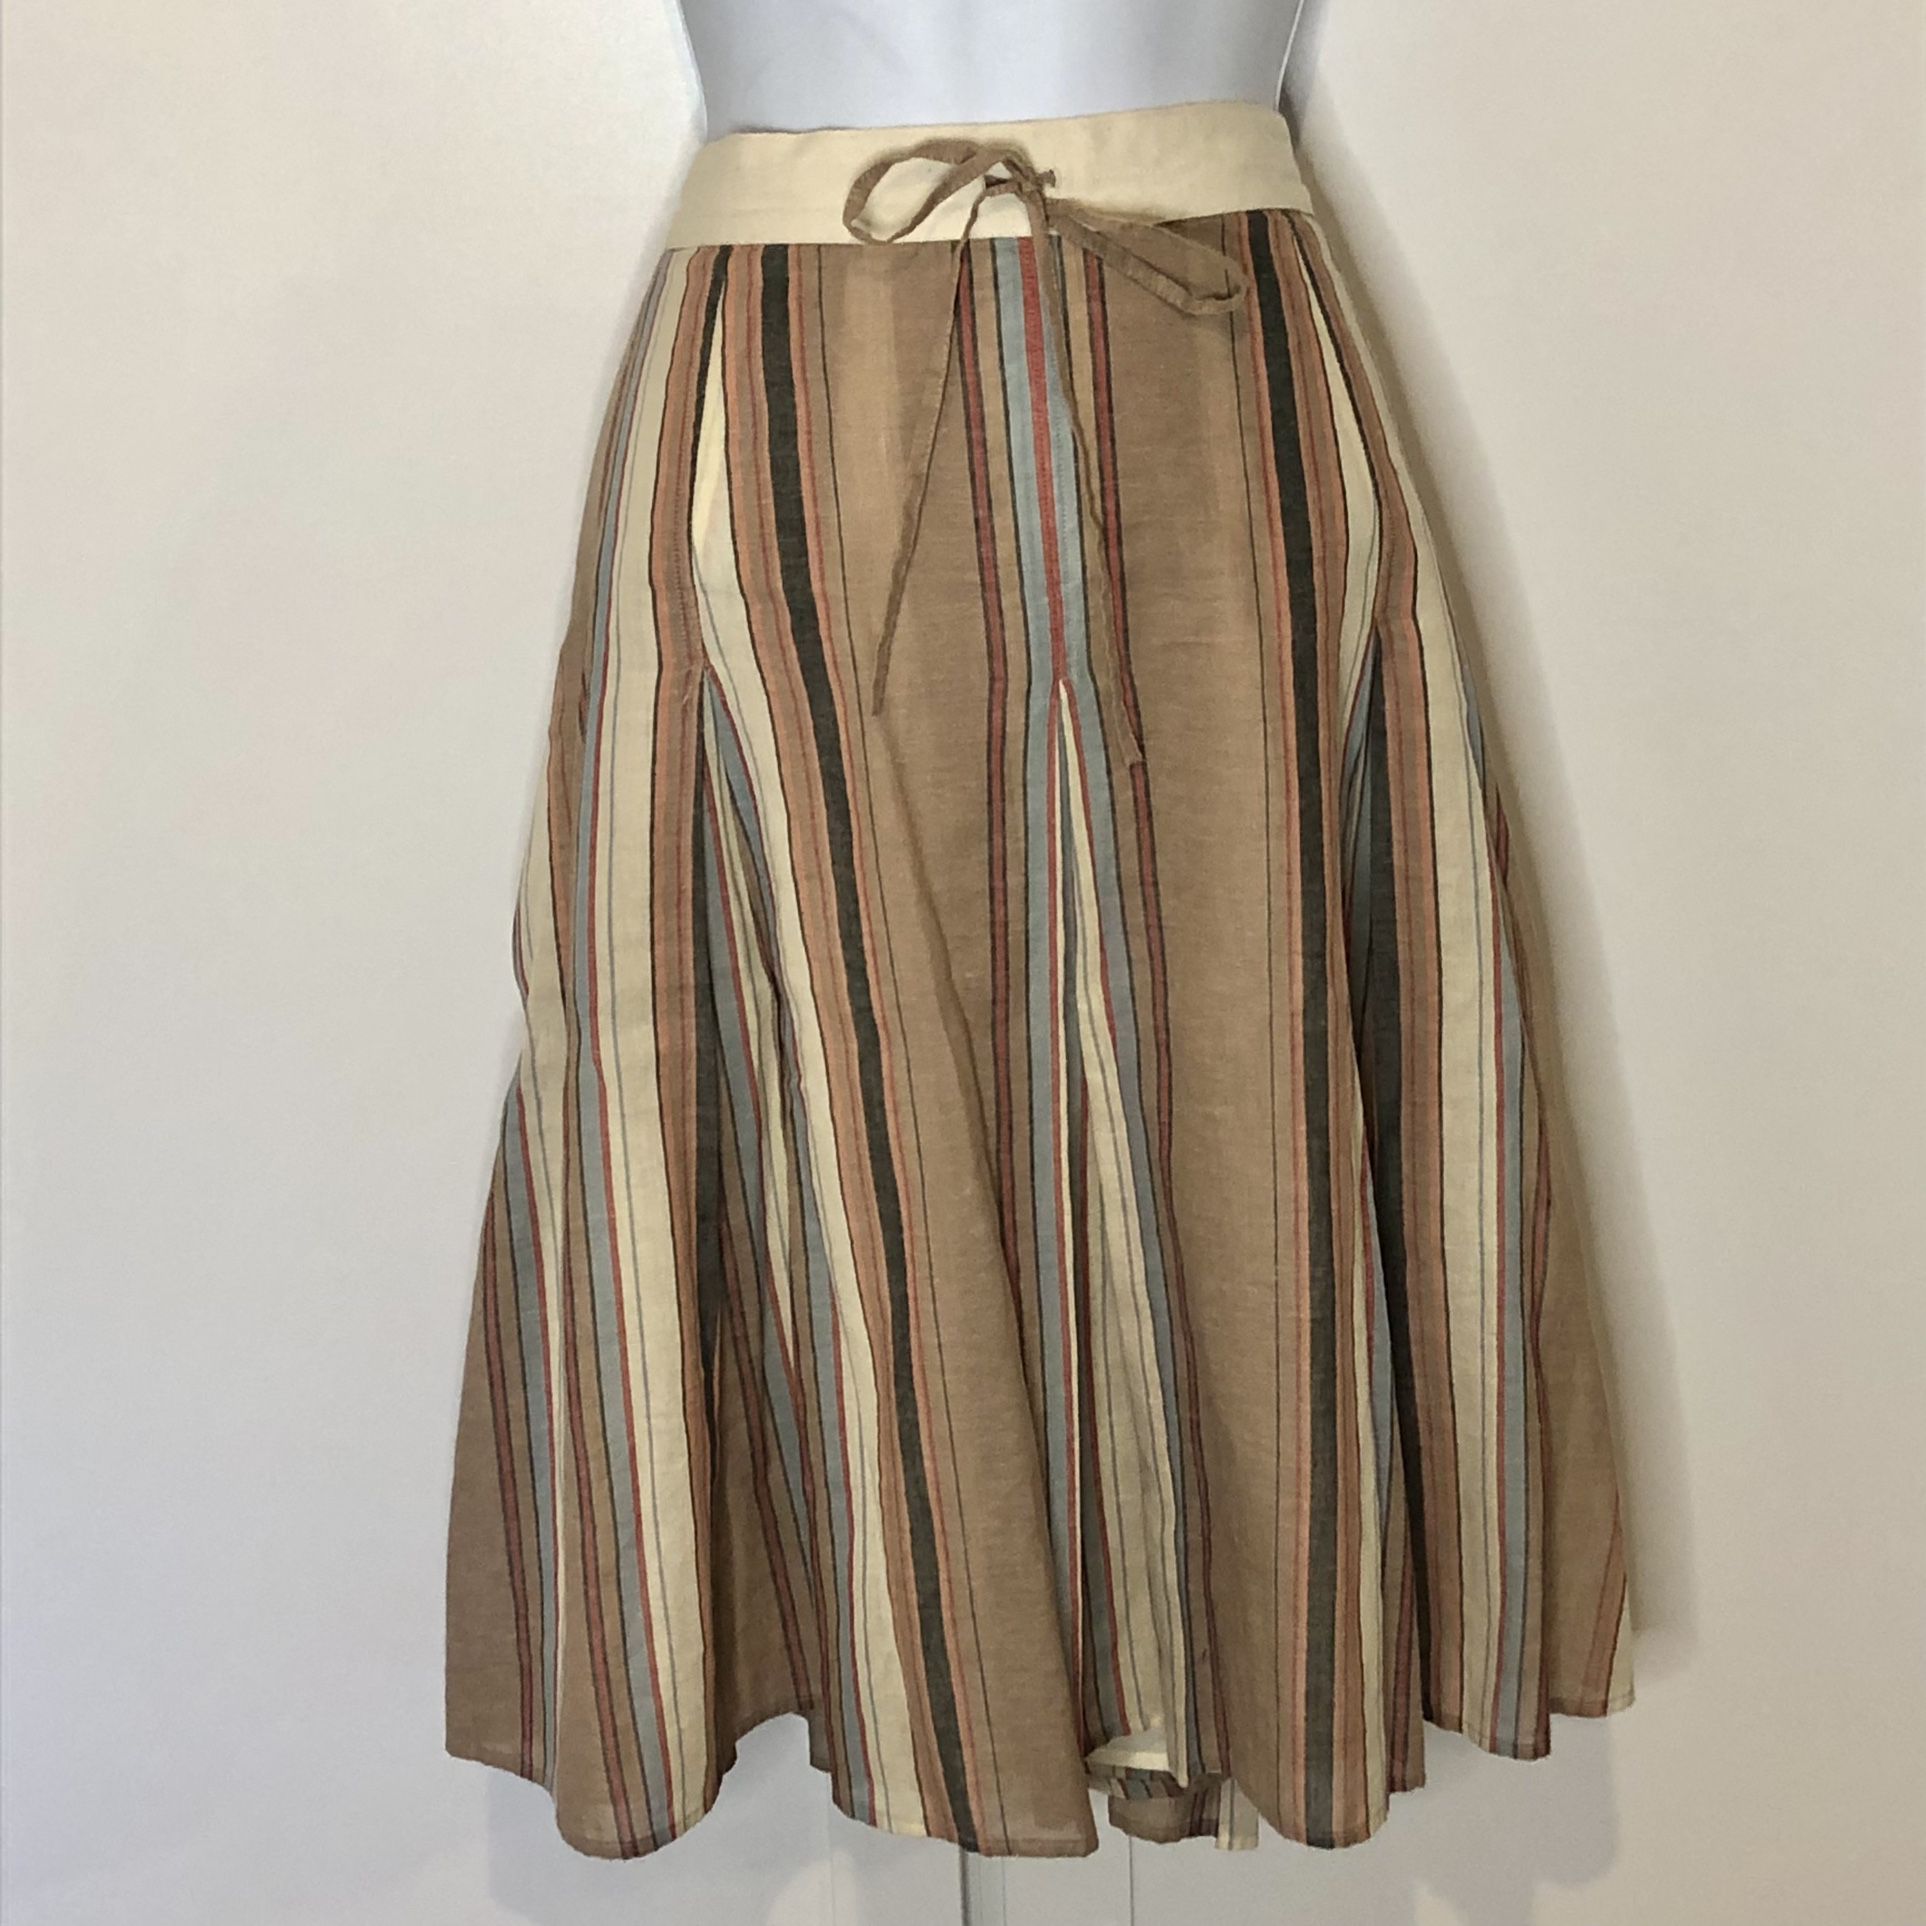 Banana Republic Striped Drawstring Skirt Size 10